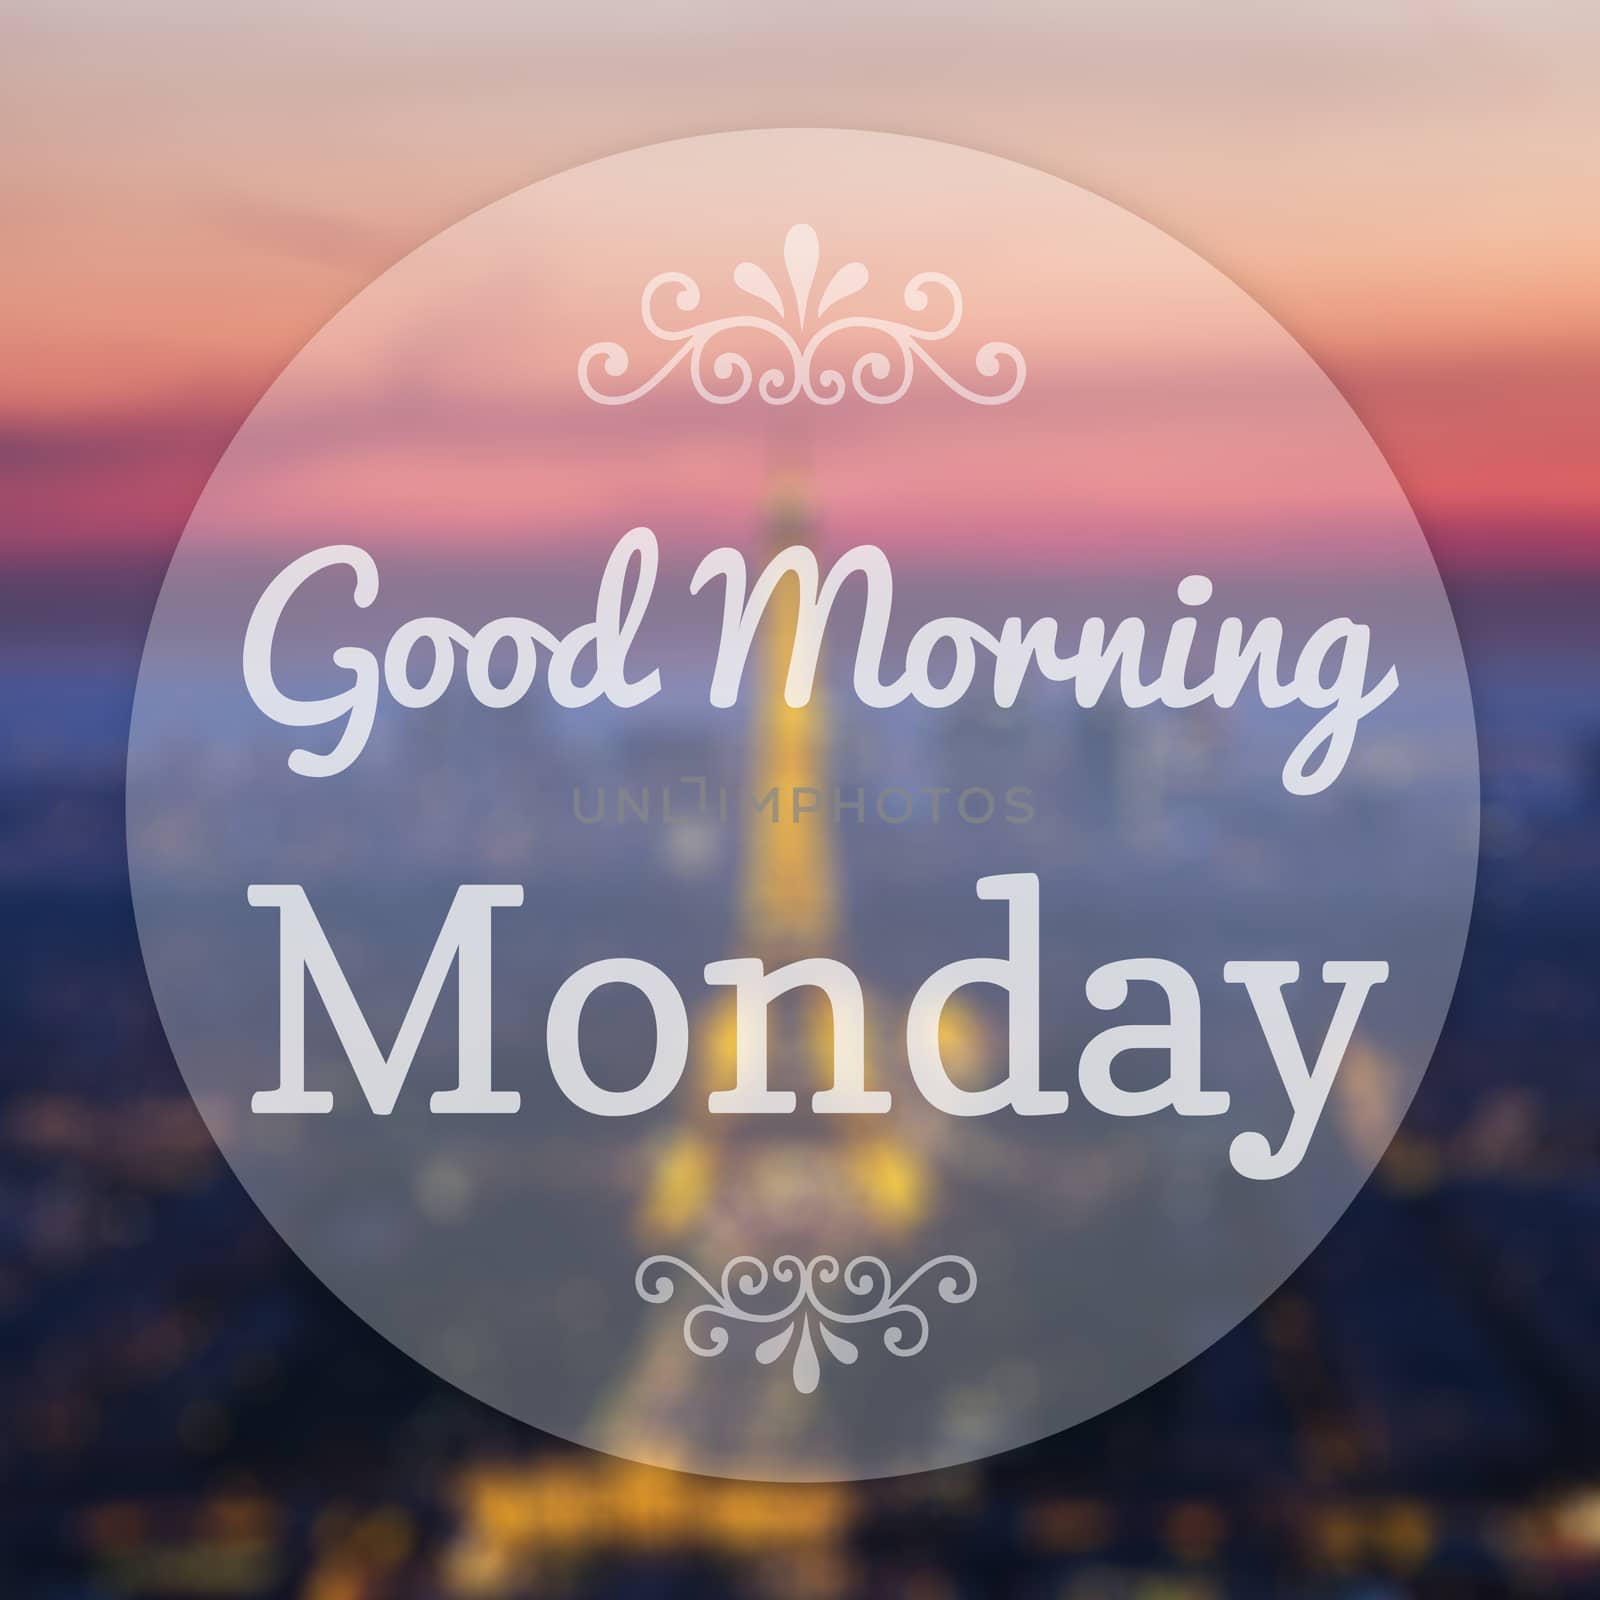 Good Morning Monday on Eiffle Paris blur background